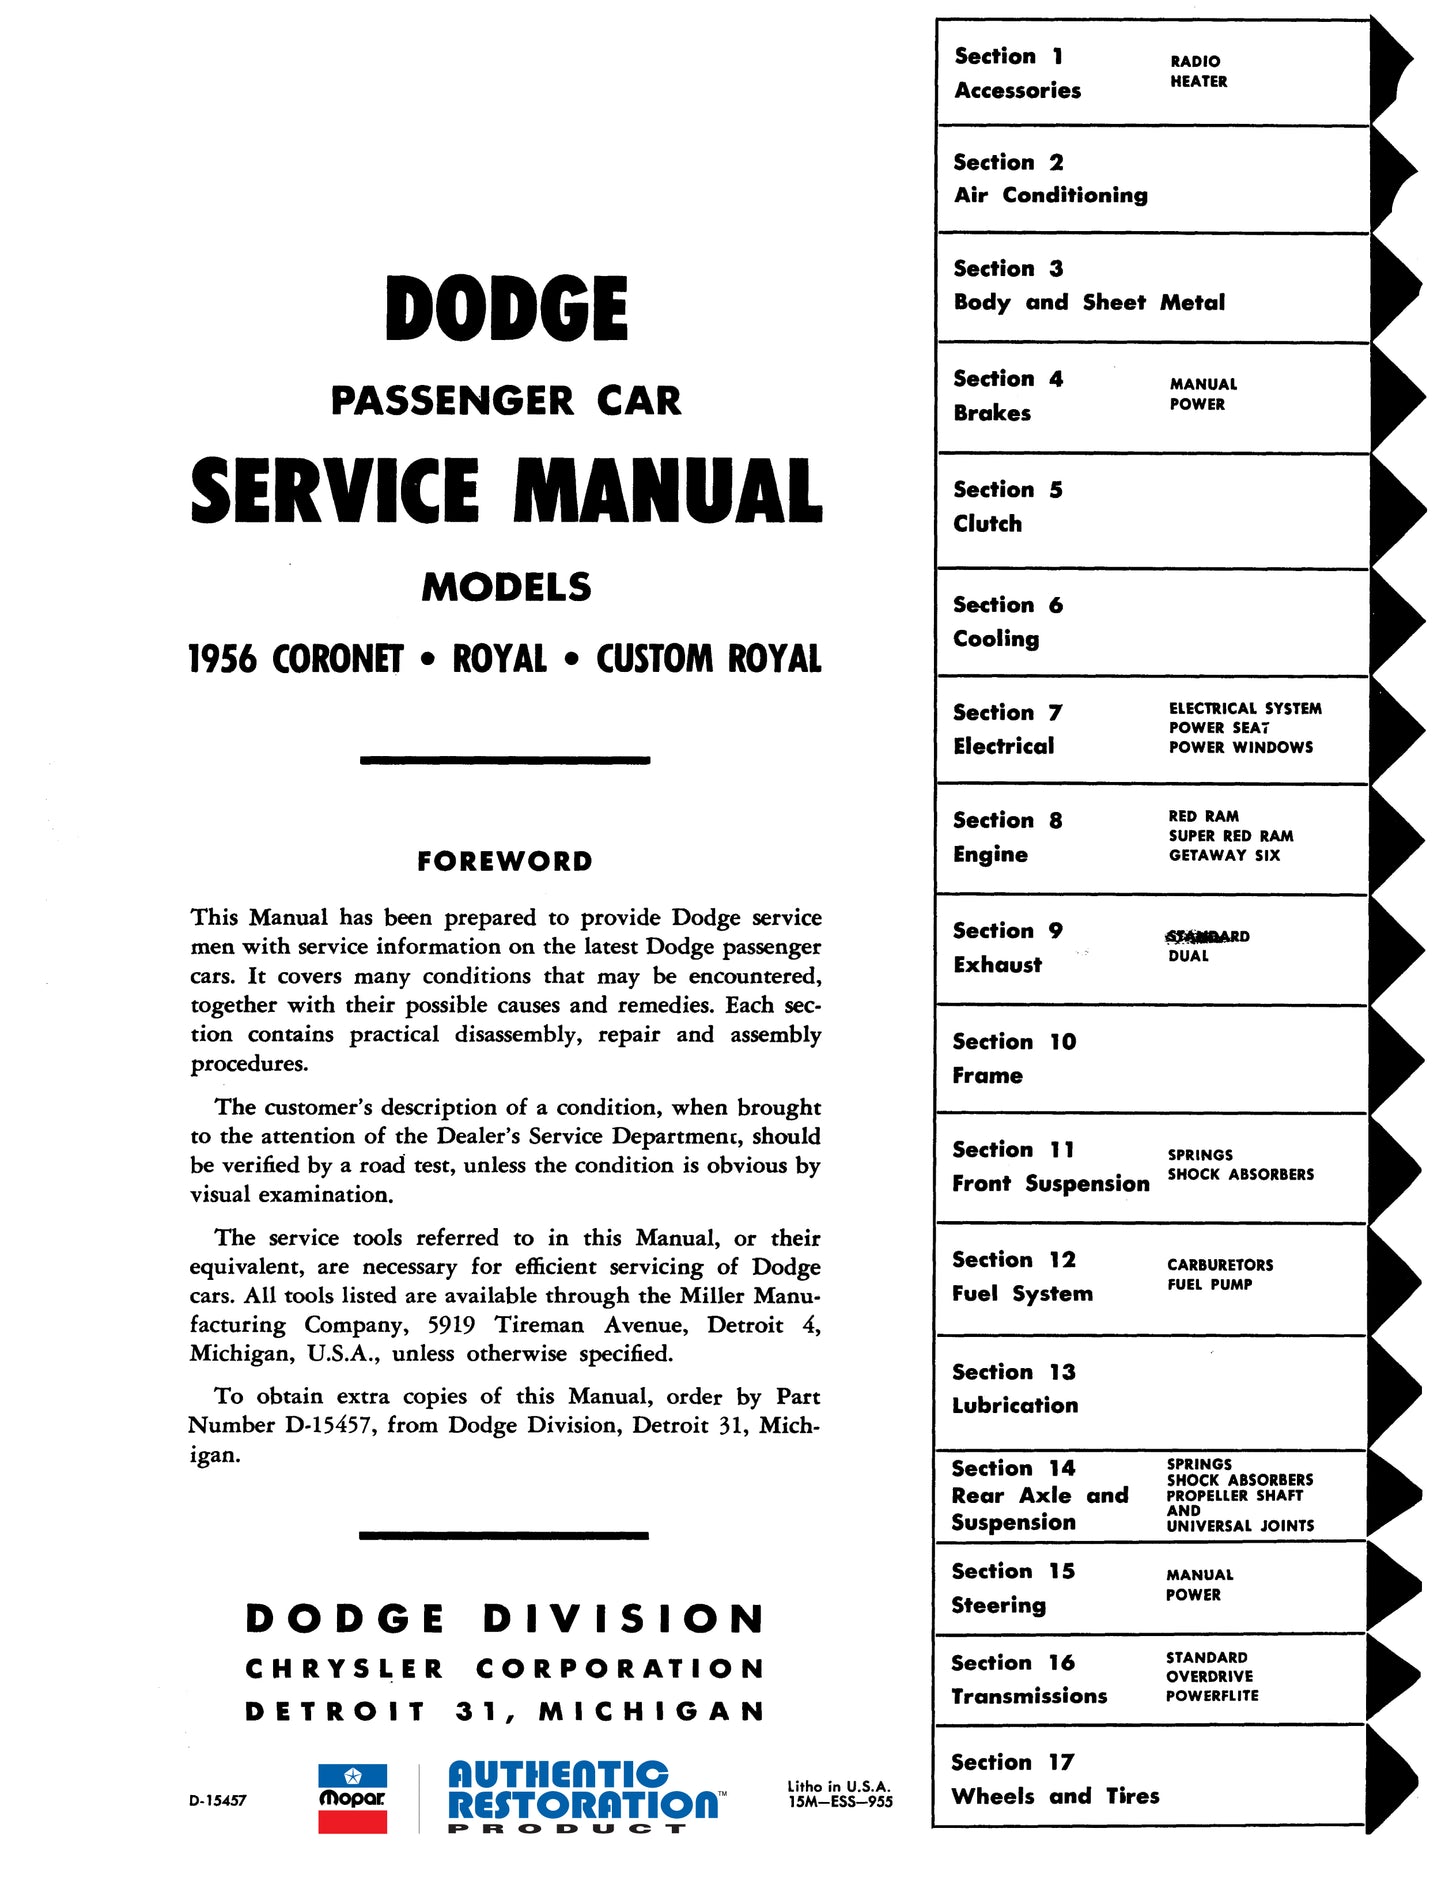 1956 Dodge Service Manual - All Models